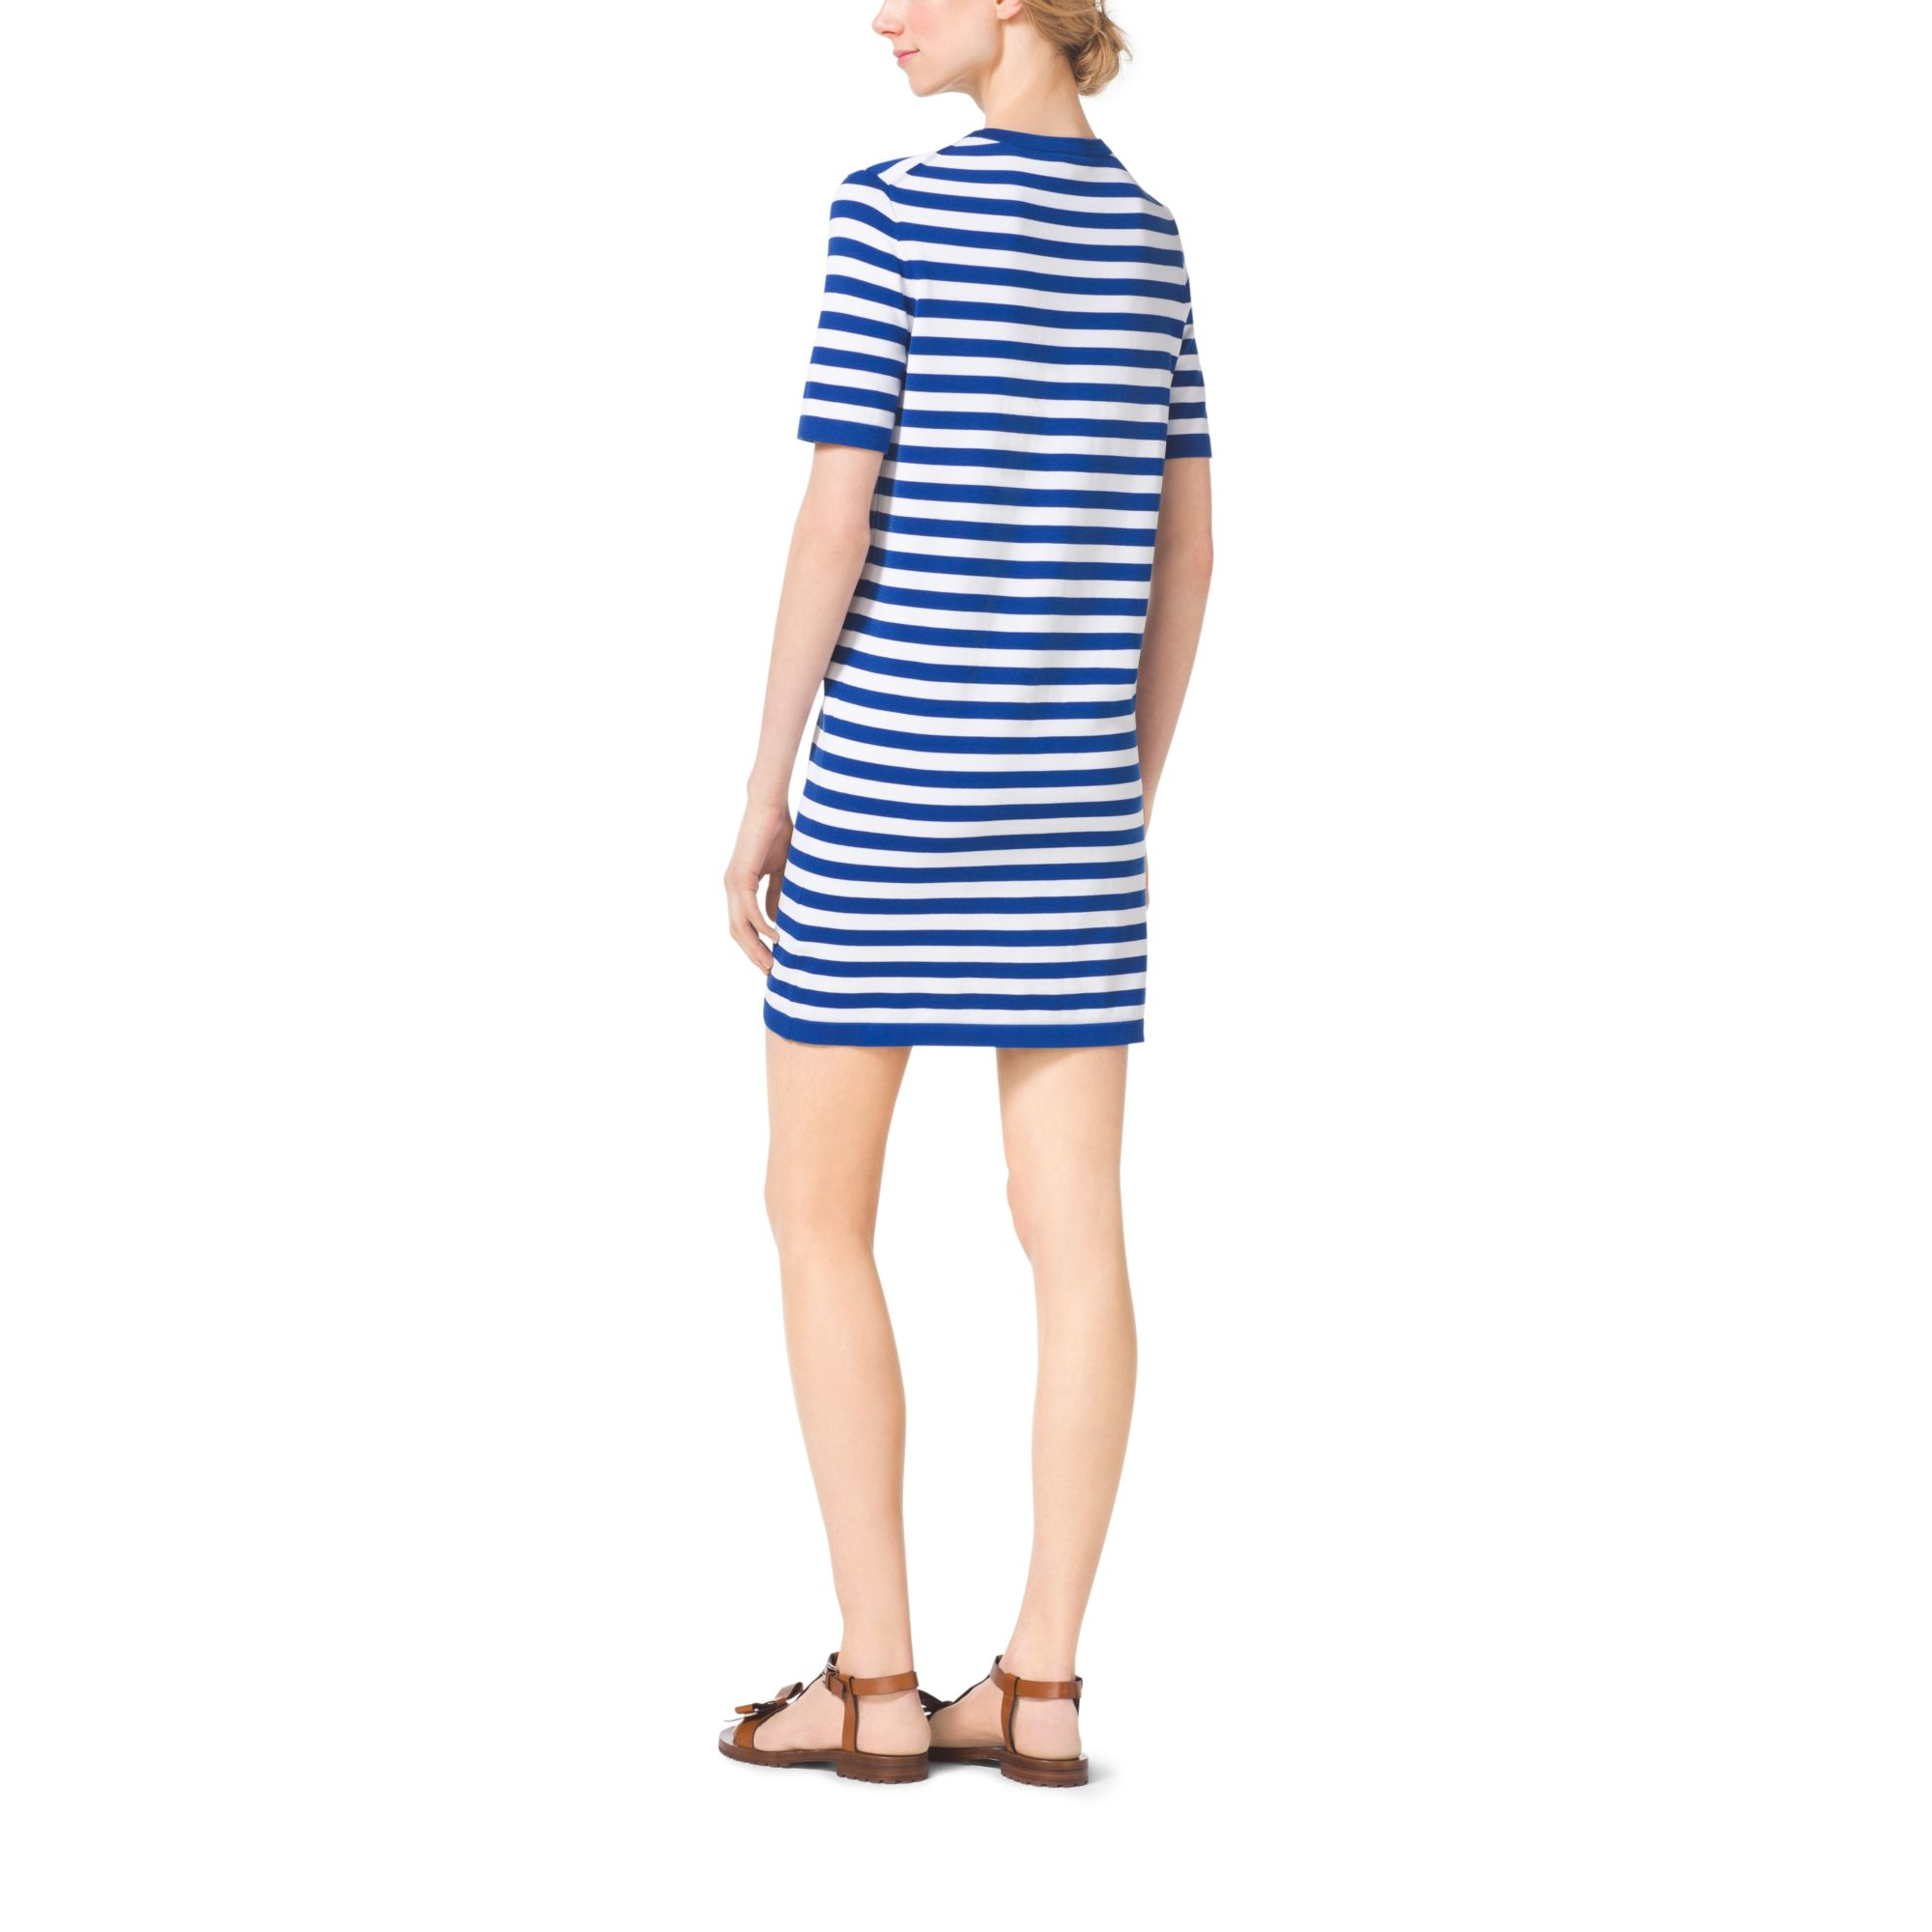 michael kors blue striped dress